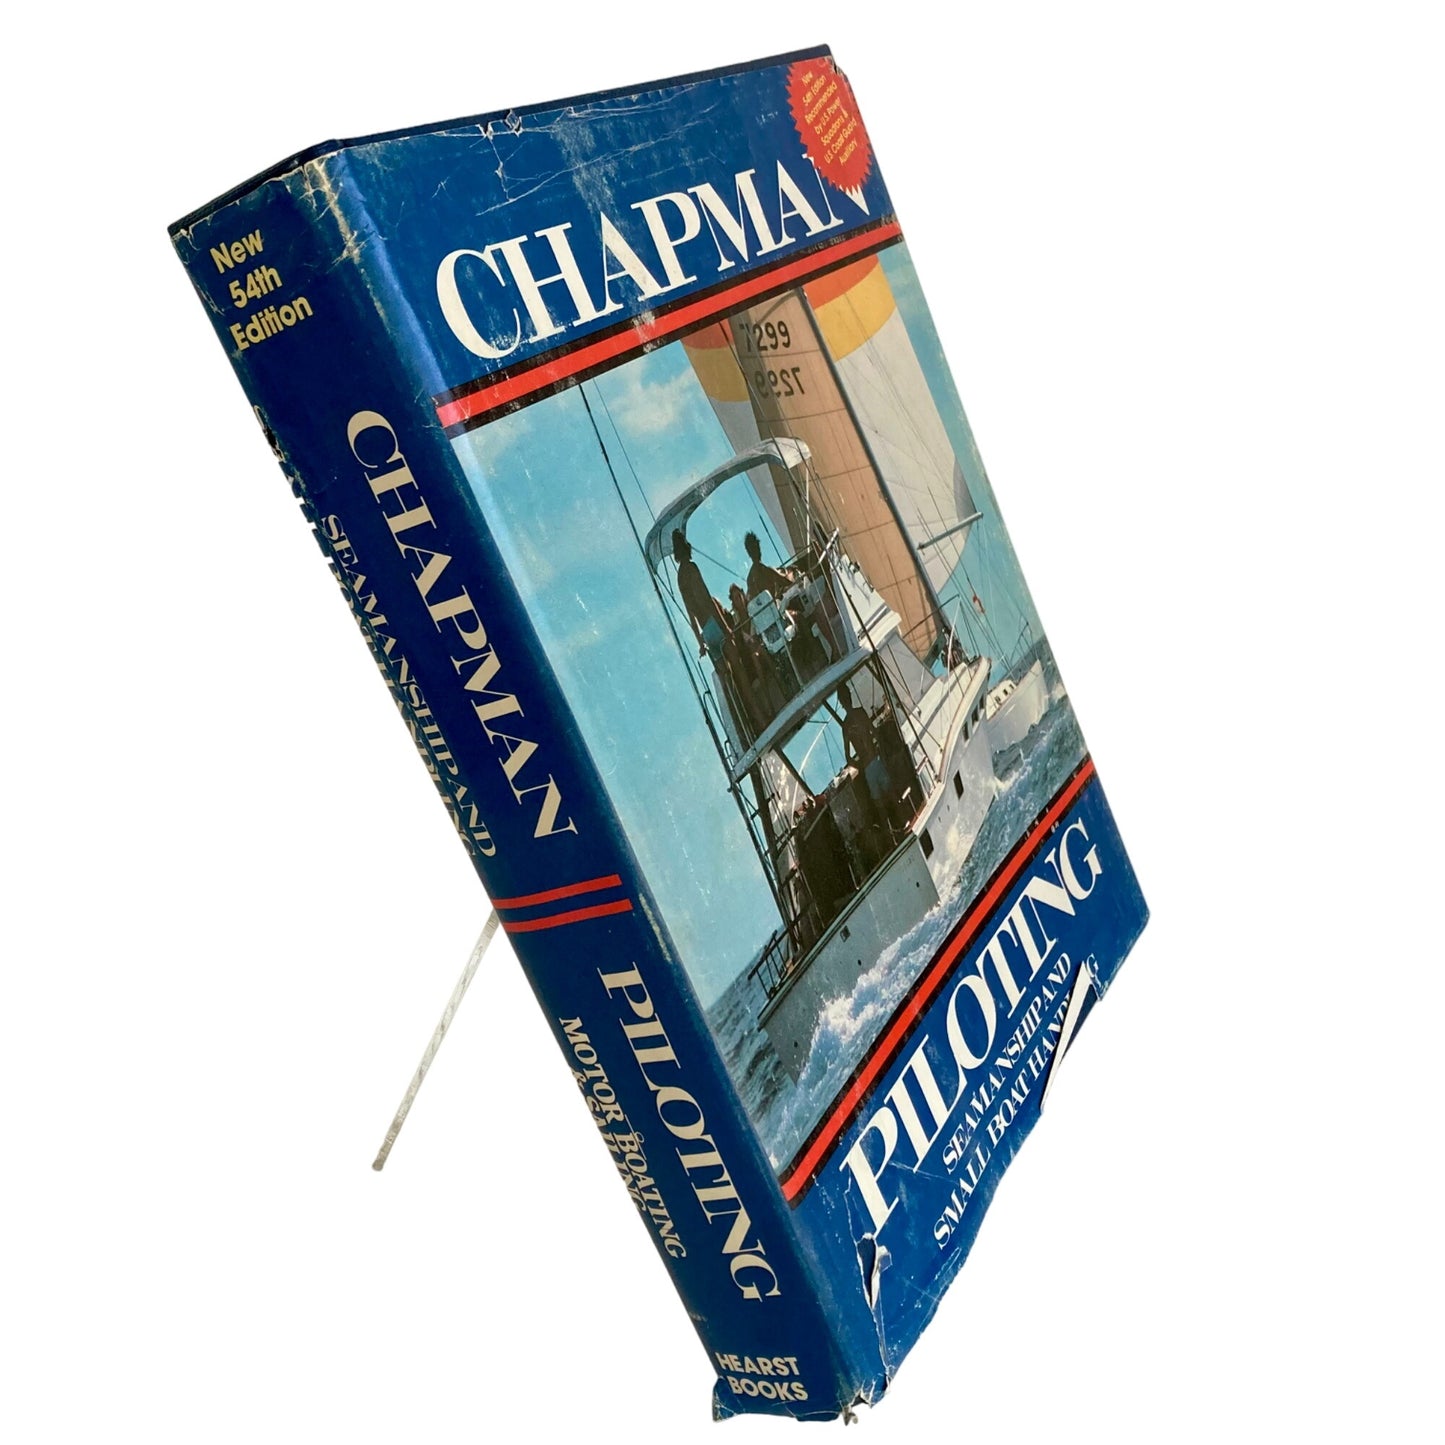 Vintage Chapman Piloting: Seamanship & Small Boat Handling Book Hardcover